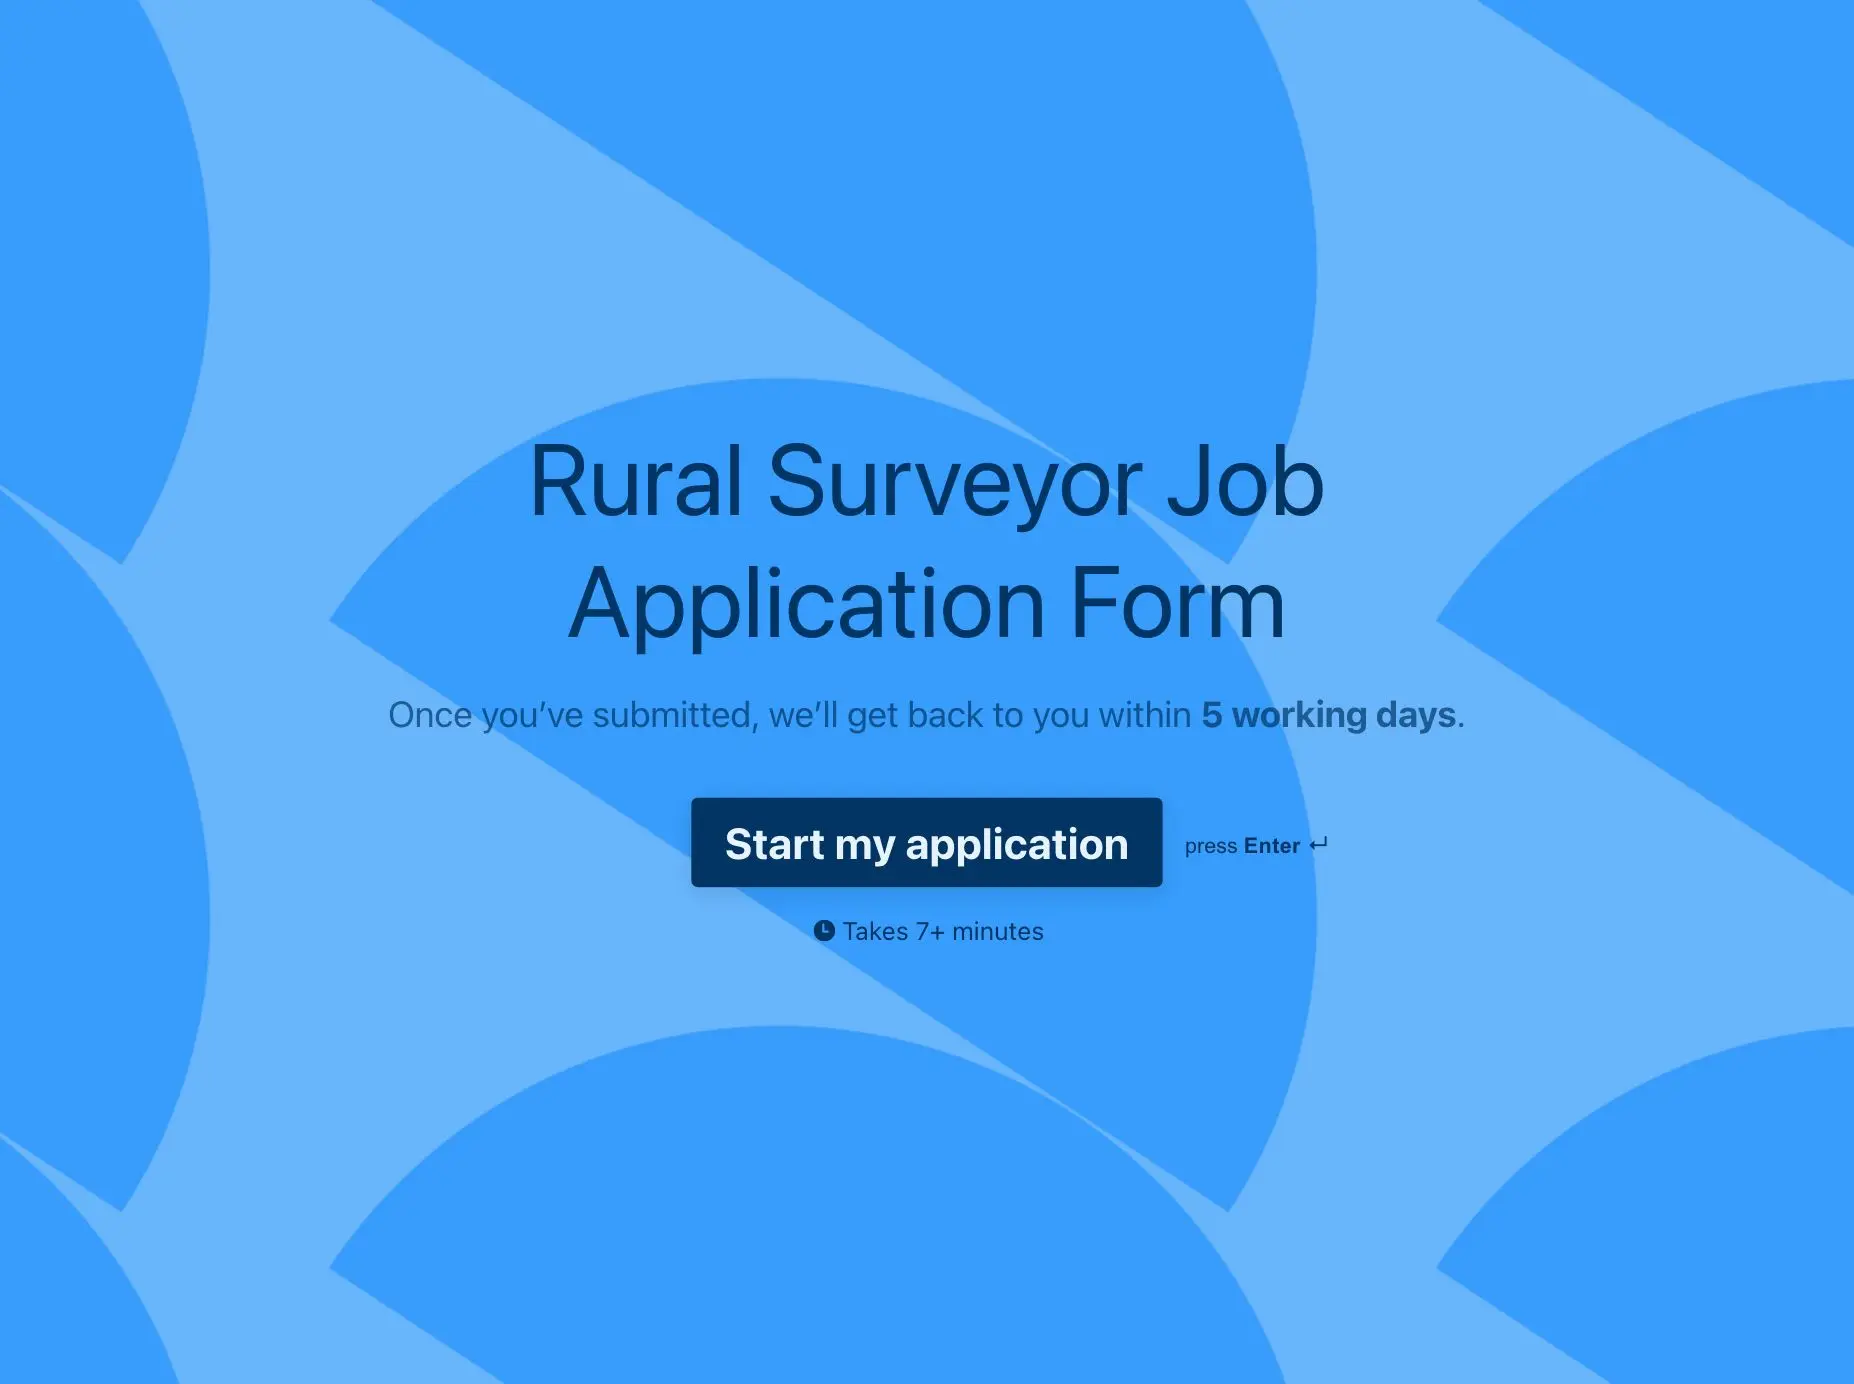 Rural Surveyor Job Application Form Template Hero